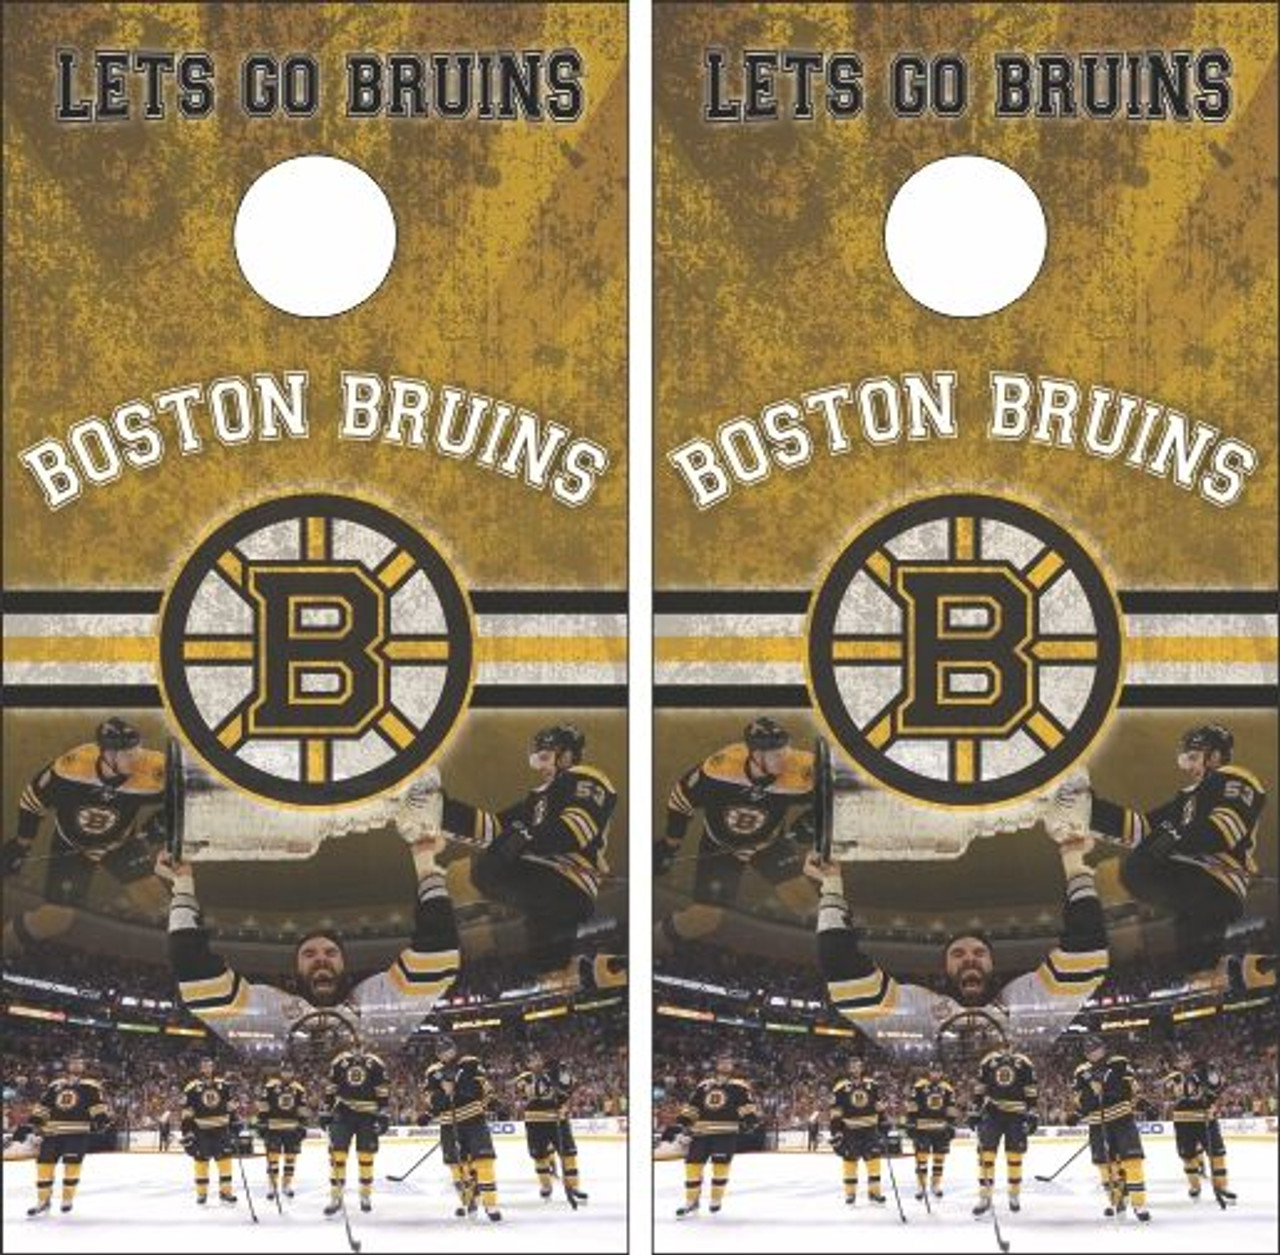 s BB1 Boston Bruins cornhole board or vehicle decal 